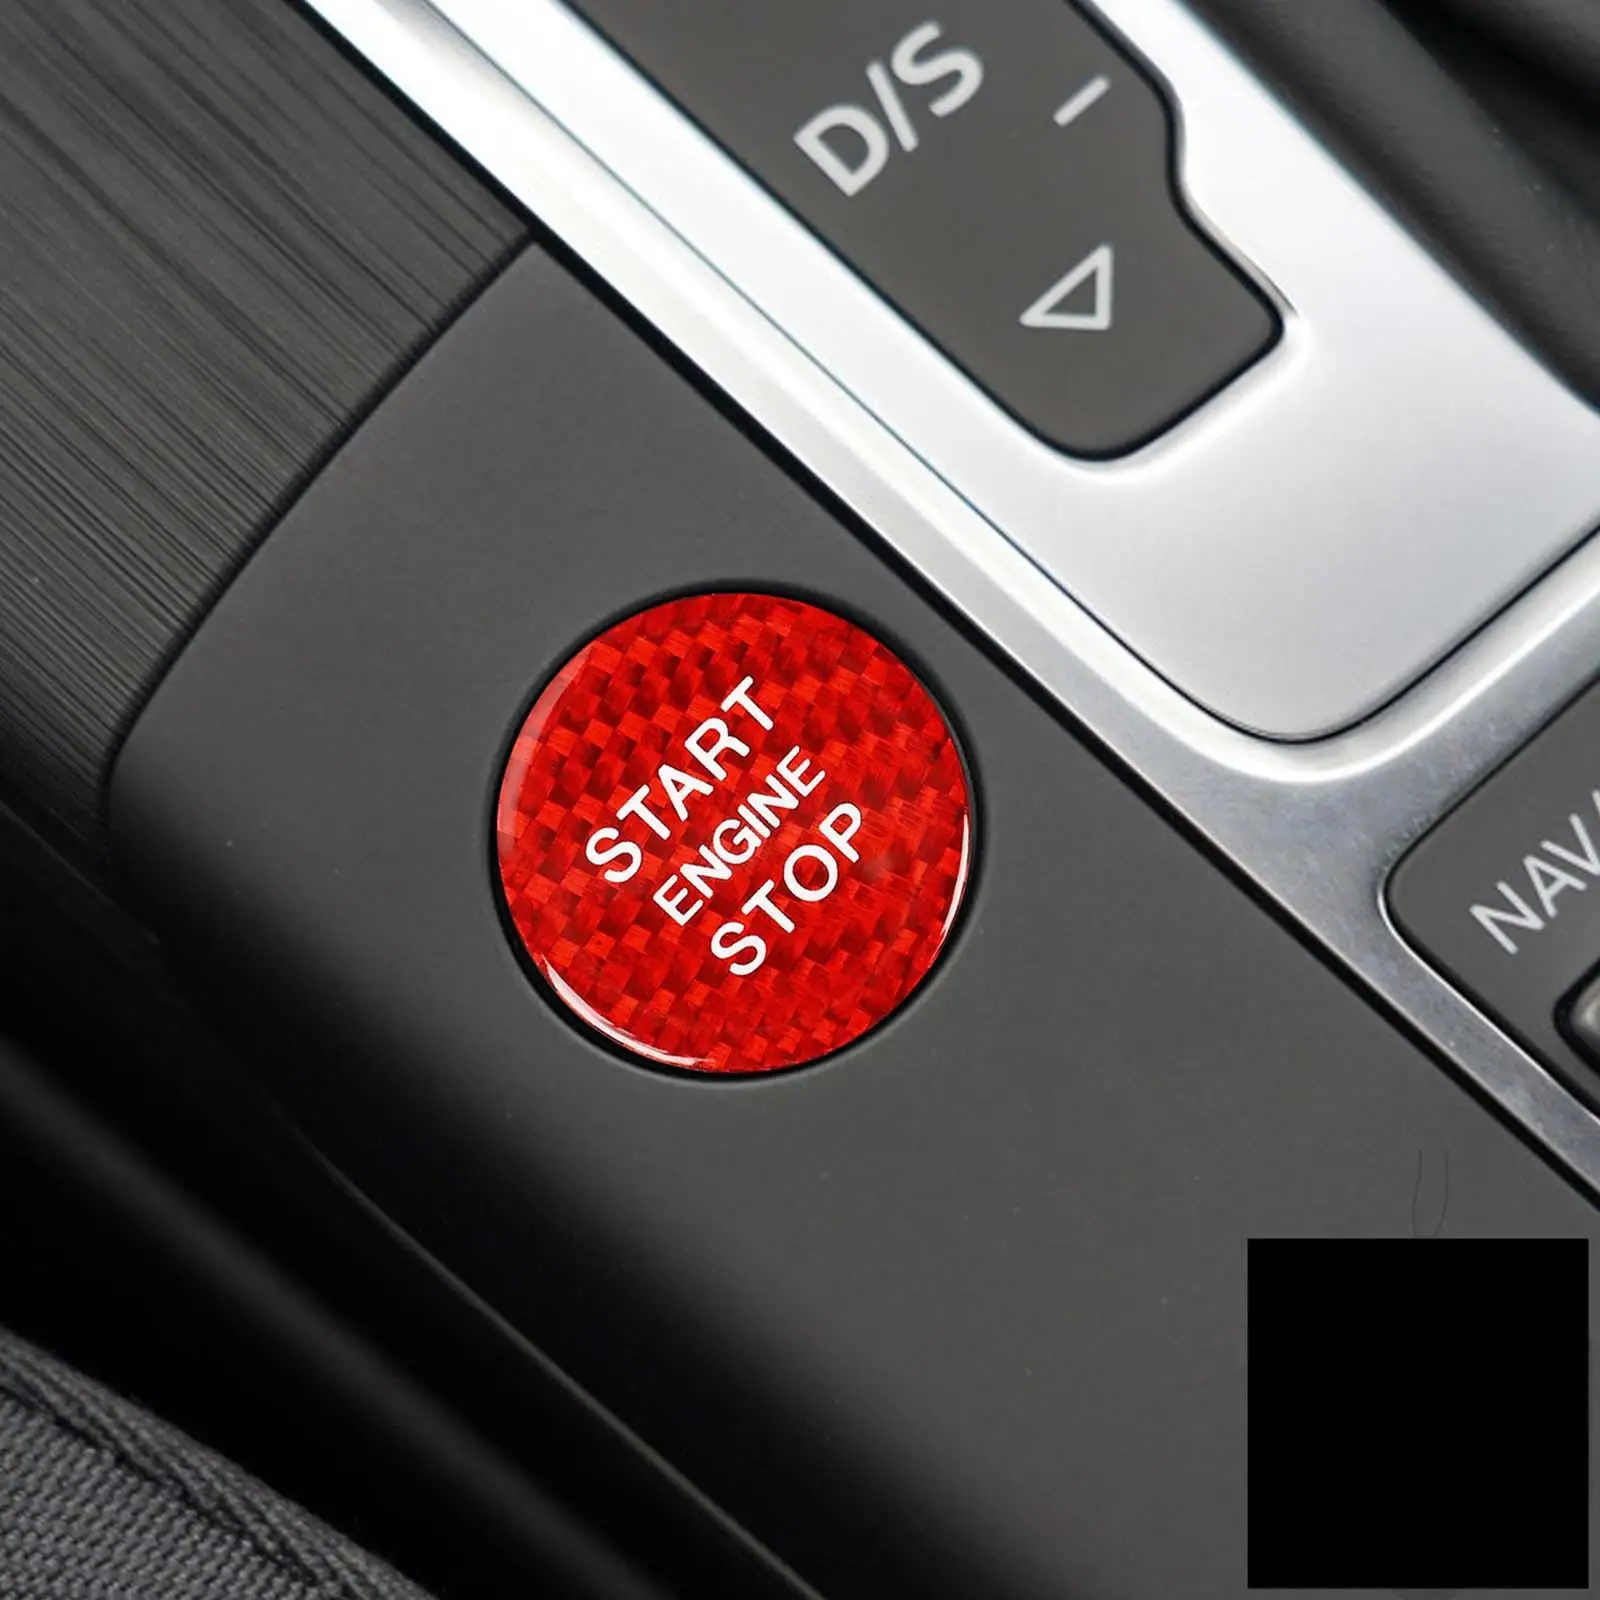 Engine Start Stop Button  for Audi A3 A4 A5 A6 Q5 Q7 Accessories